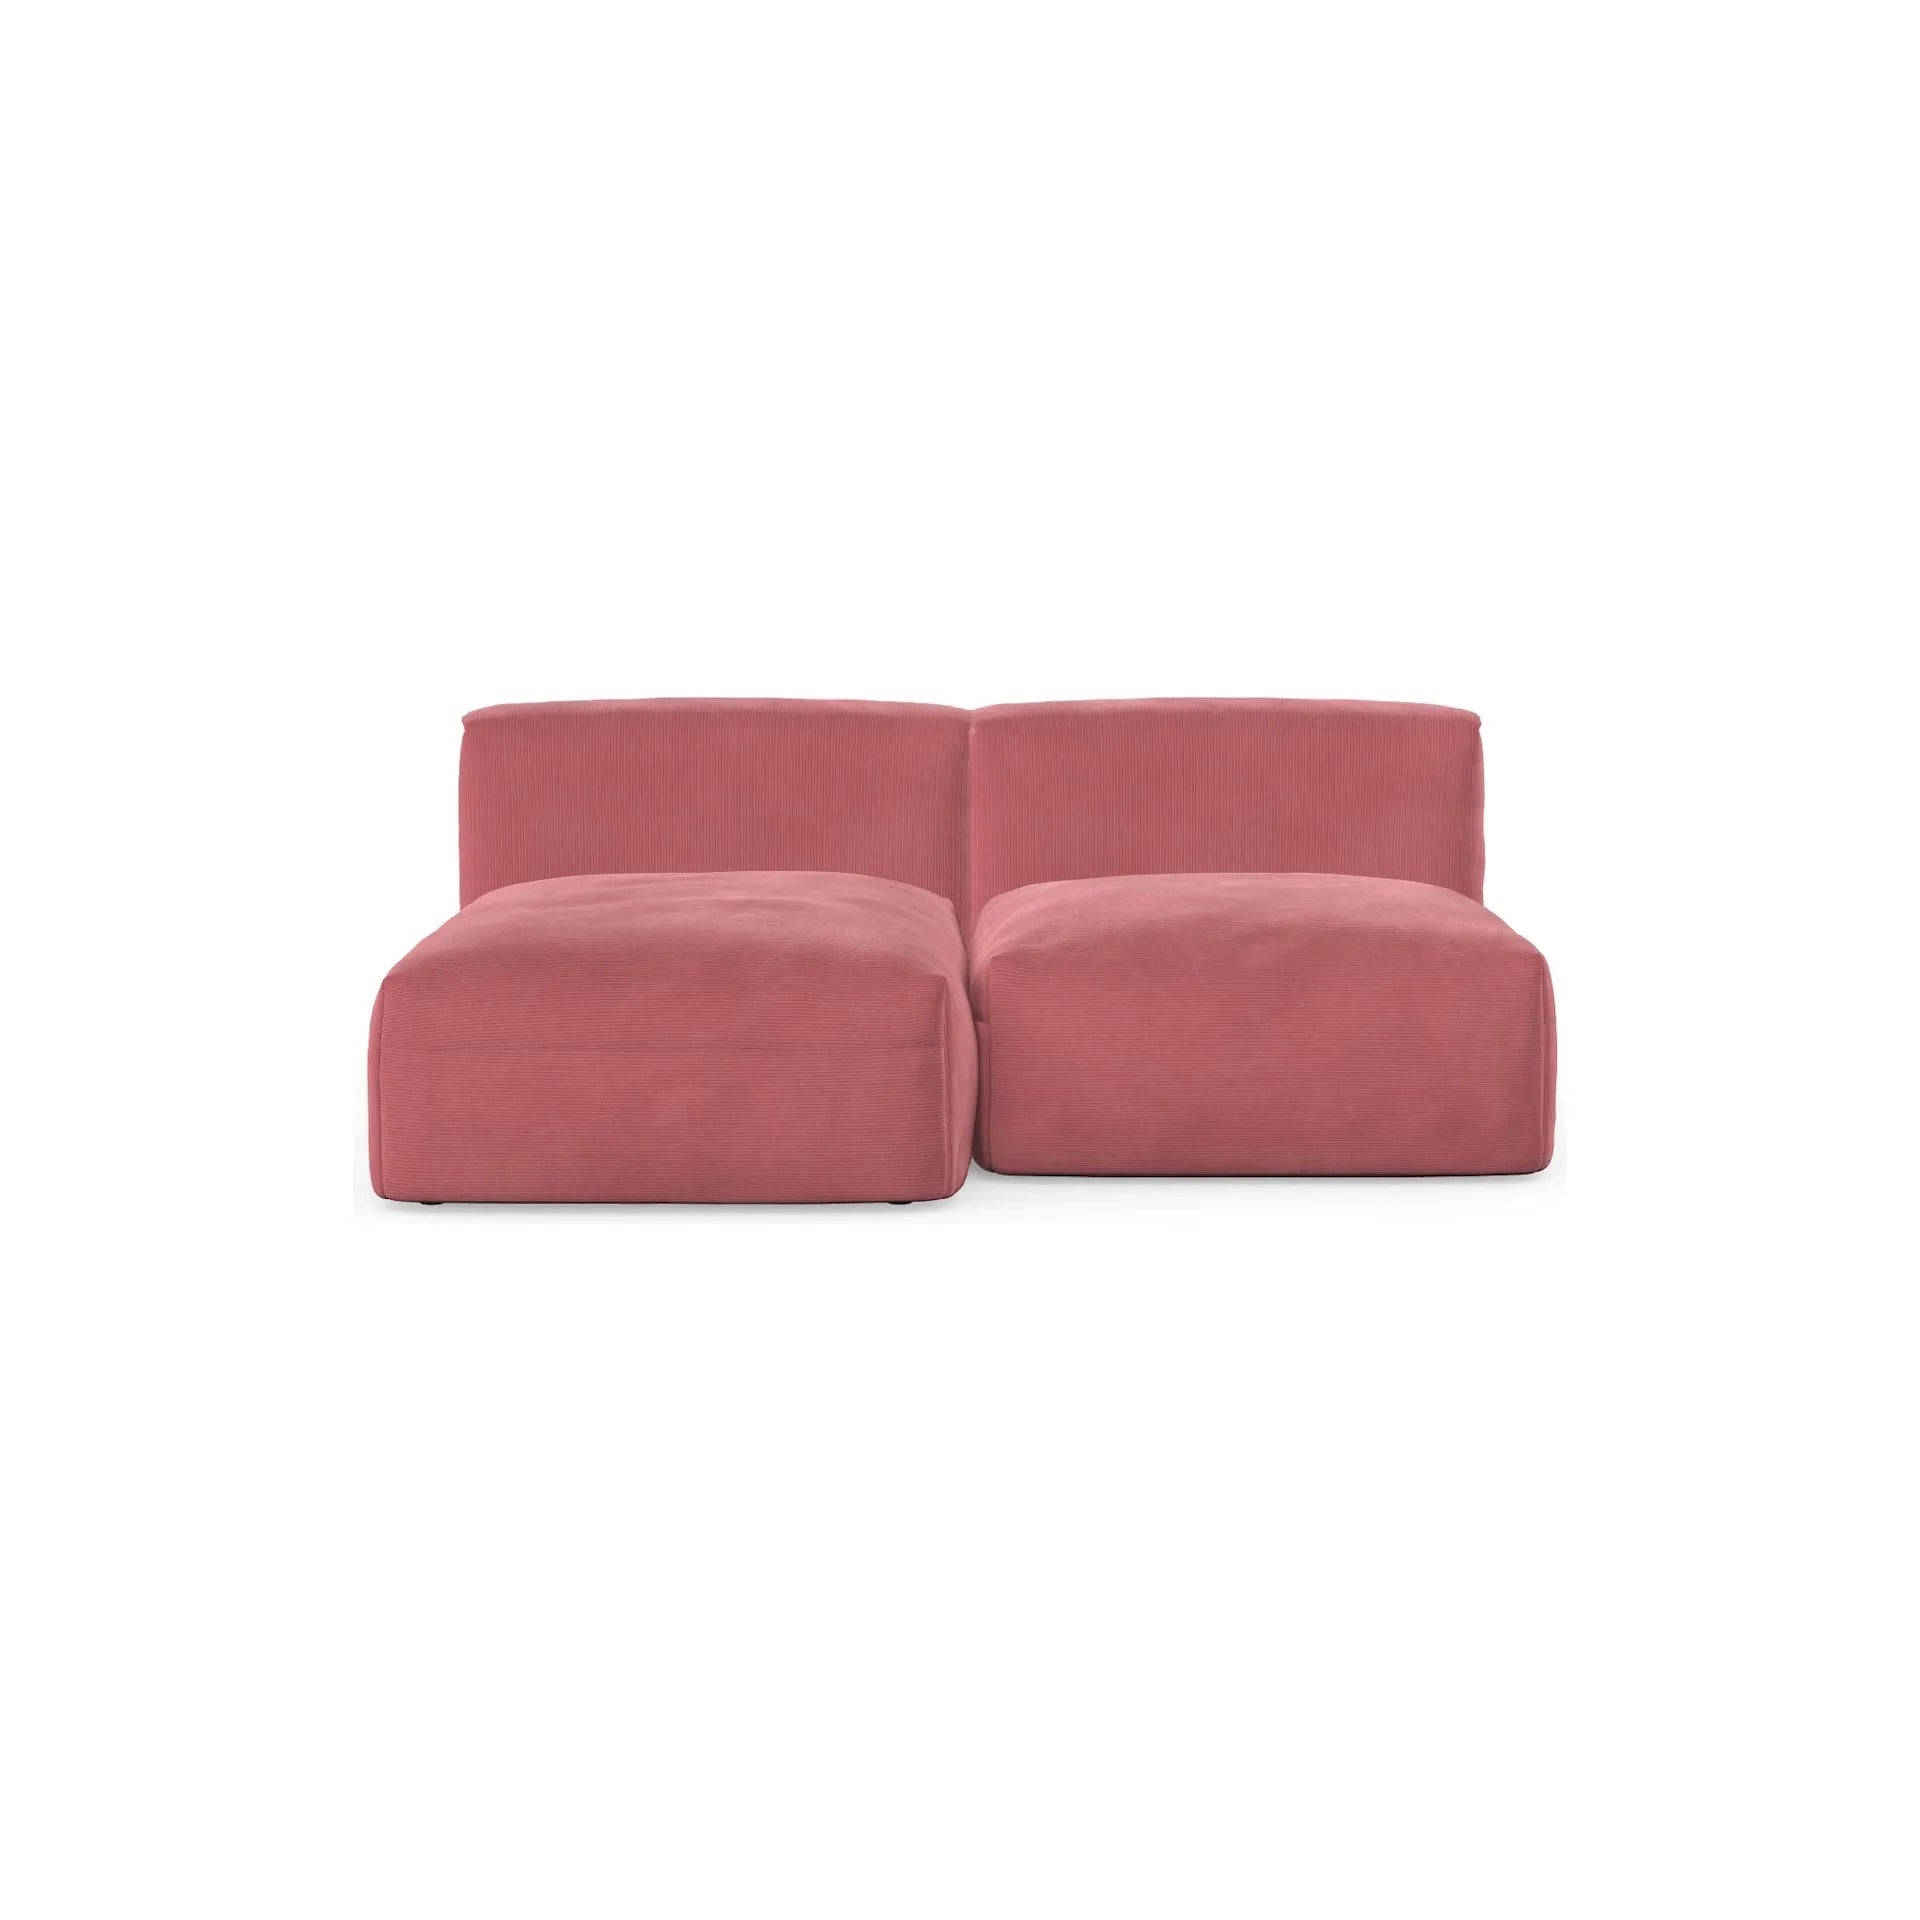 CLOUD M, 3 vietų modulinė sofa, melsva spalva, velvetas